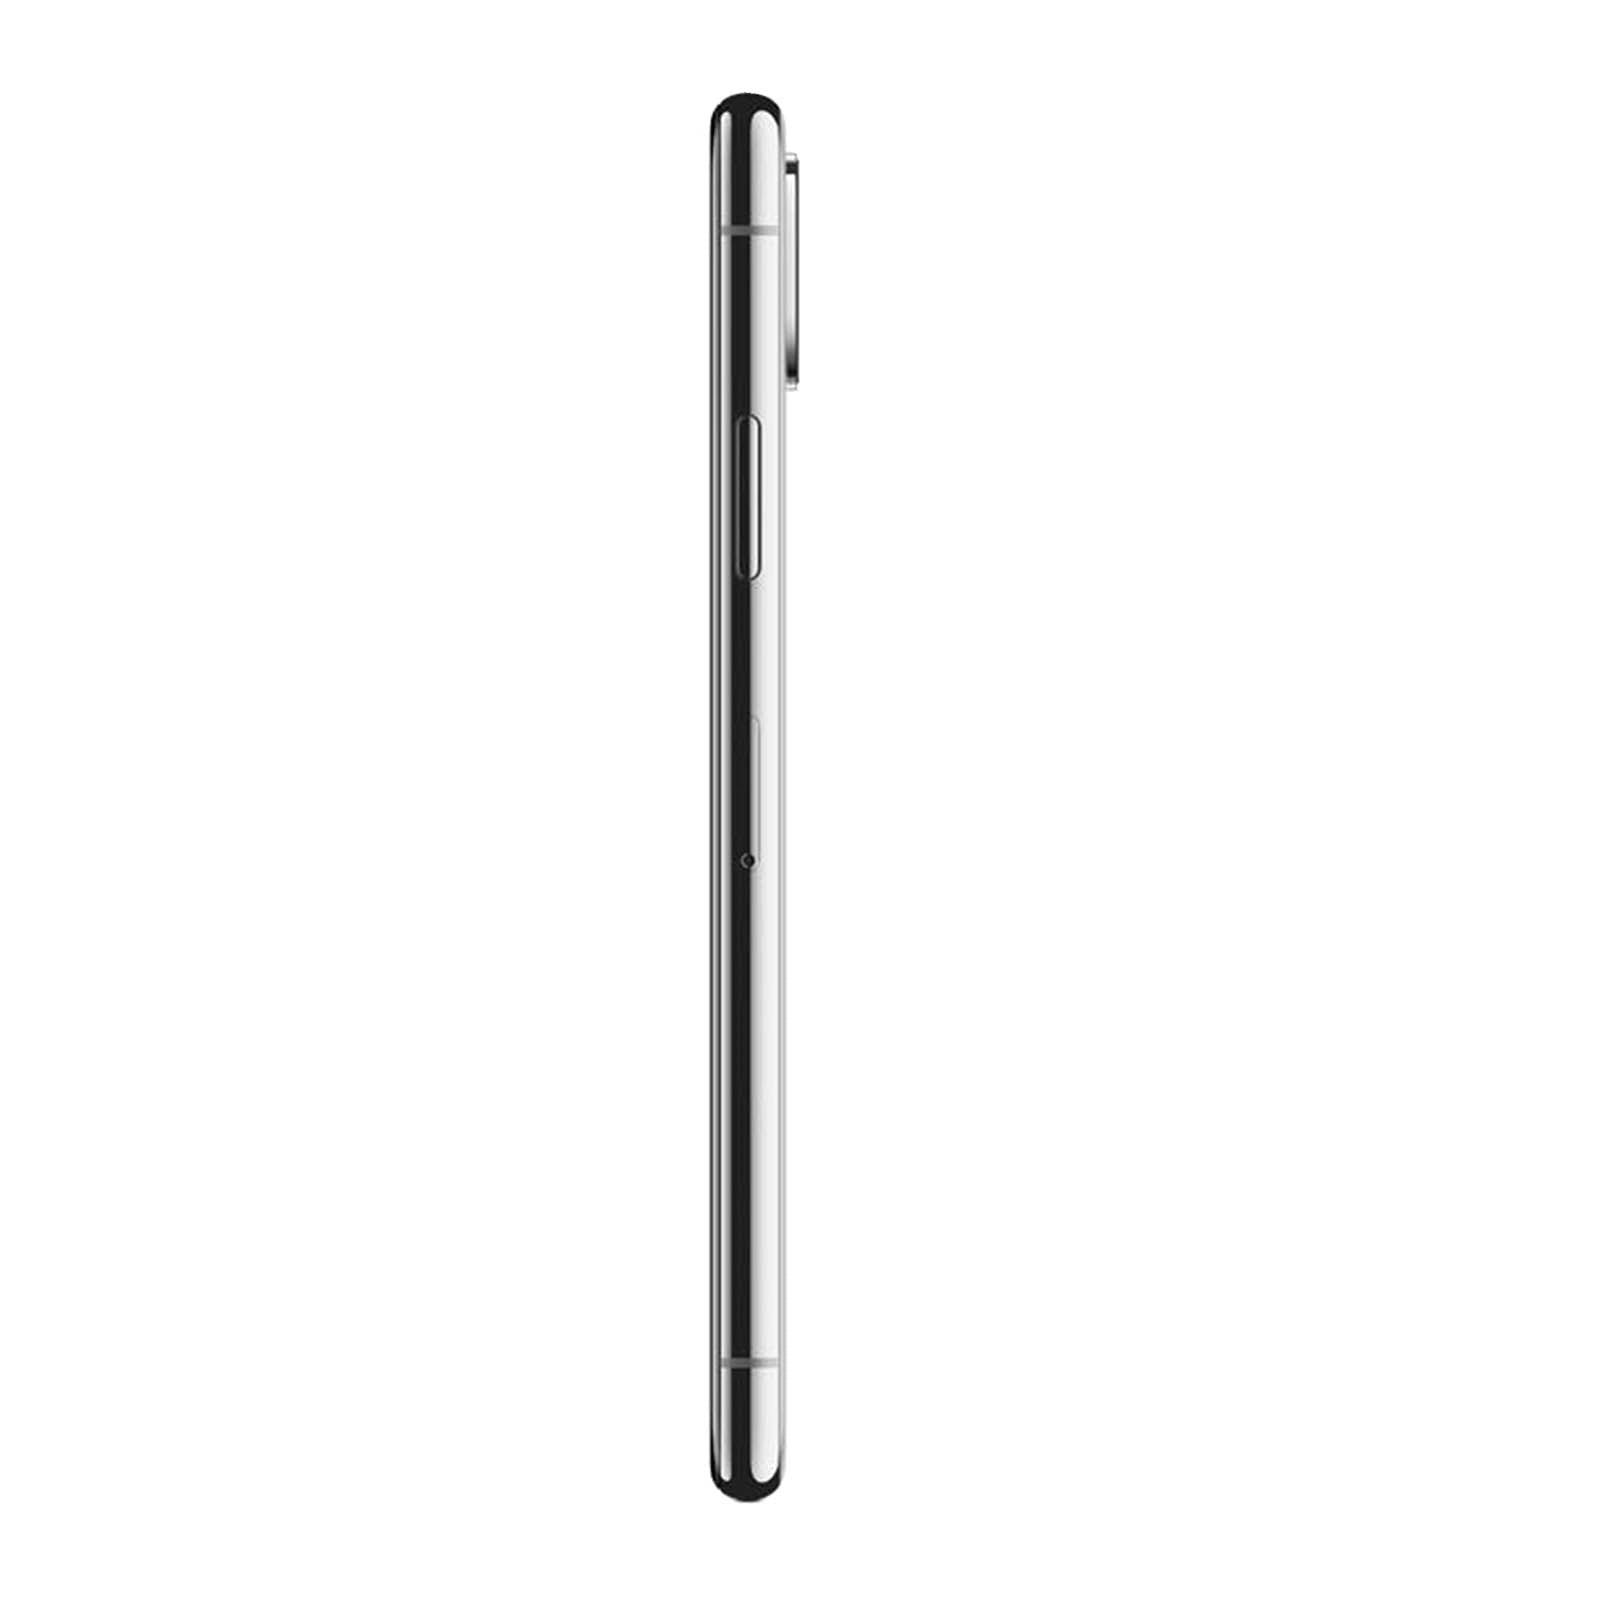 Apple iPhone XS 256GB Silver Fair - Unlocked